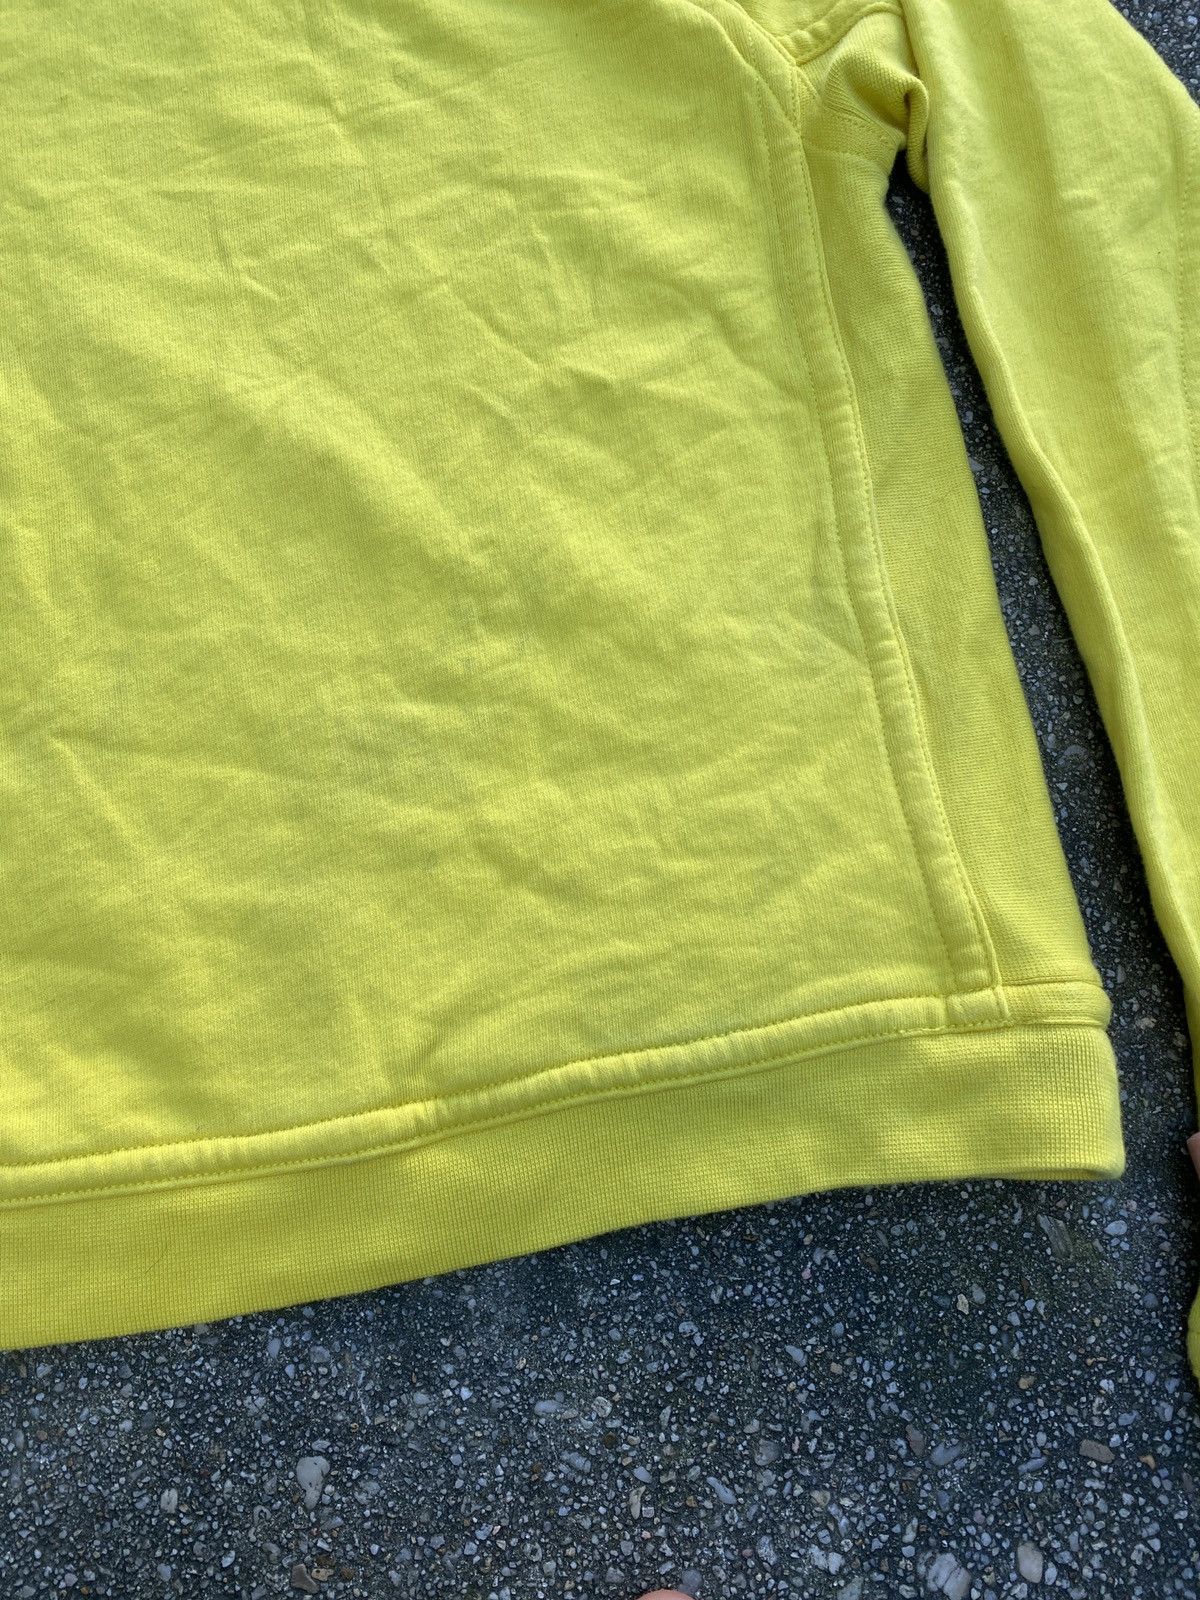 Haider Ackermann Haider Ackermann Indigo Cropped Sweatshirt Size US XL / EU 56 / 4 - 3 Preview